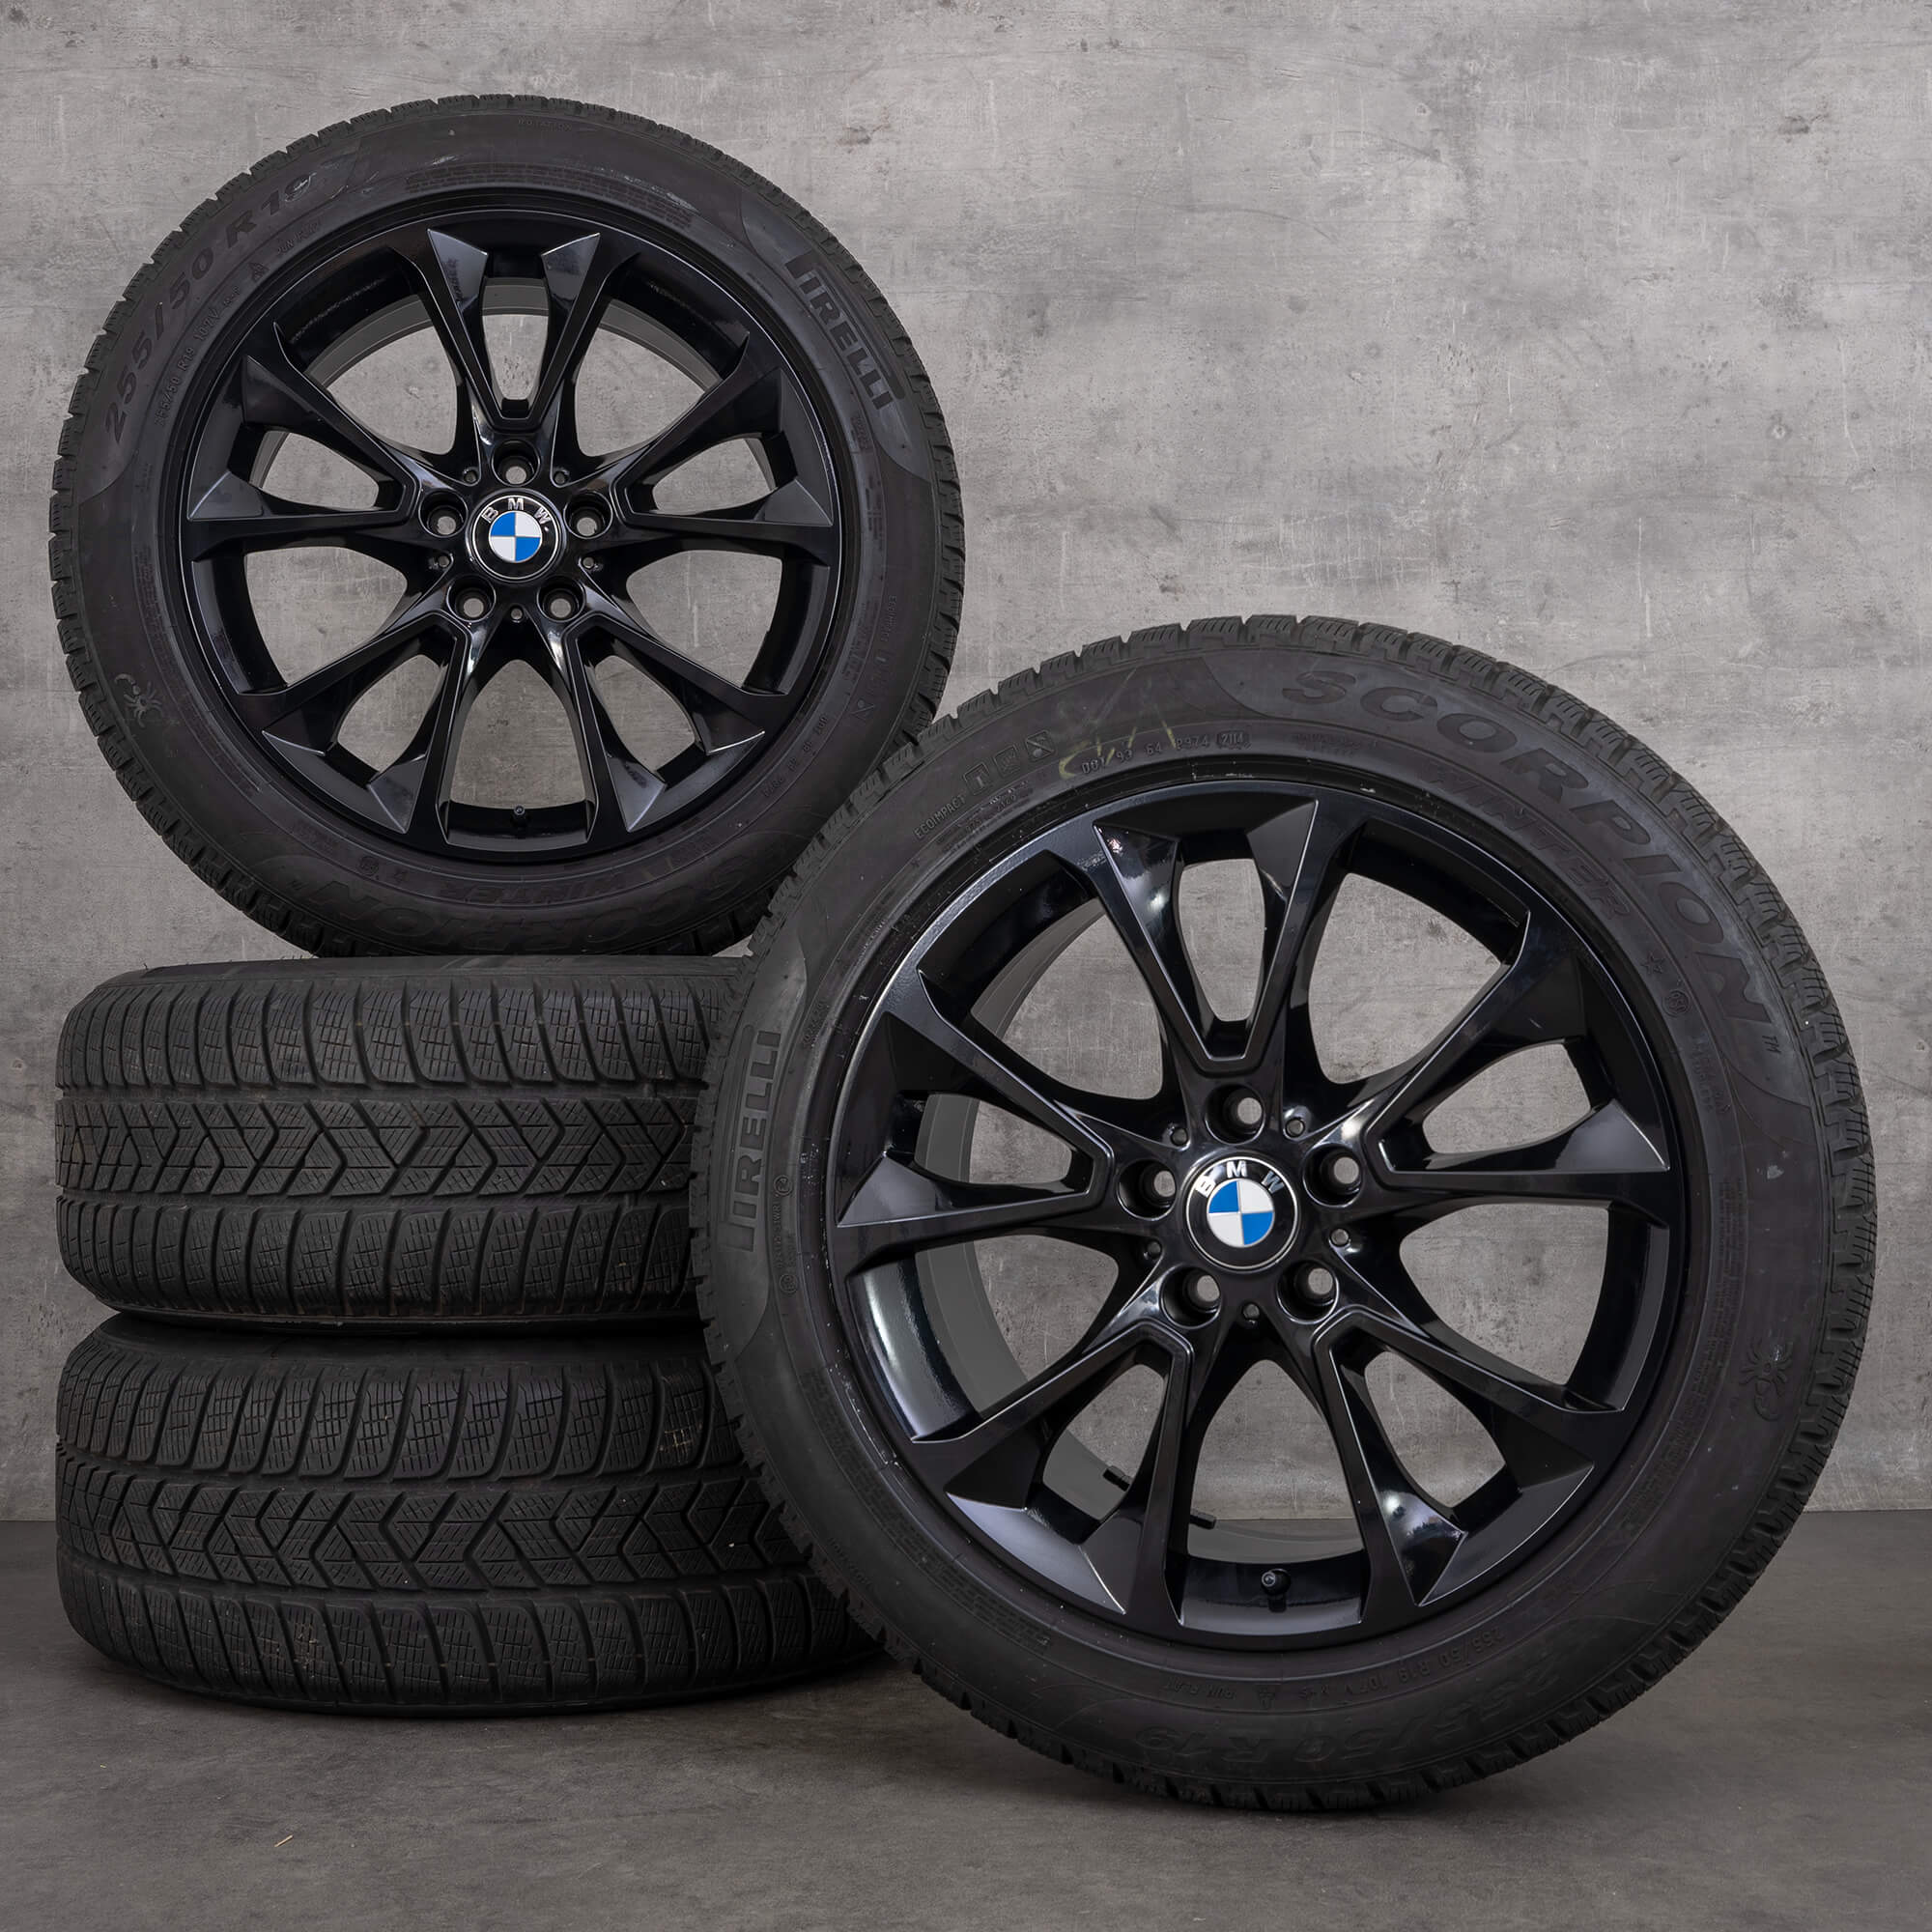 BMW cerchio da 19 pollici X5 E70 F15 pneumatici invernali ruote stile 449